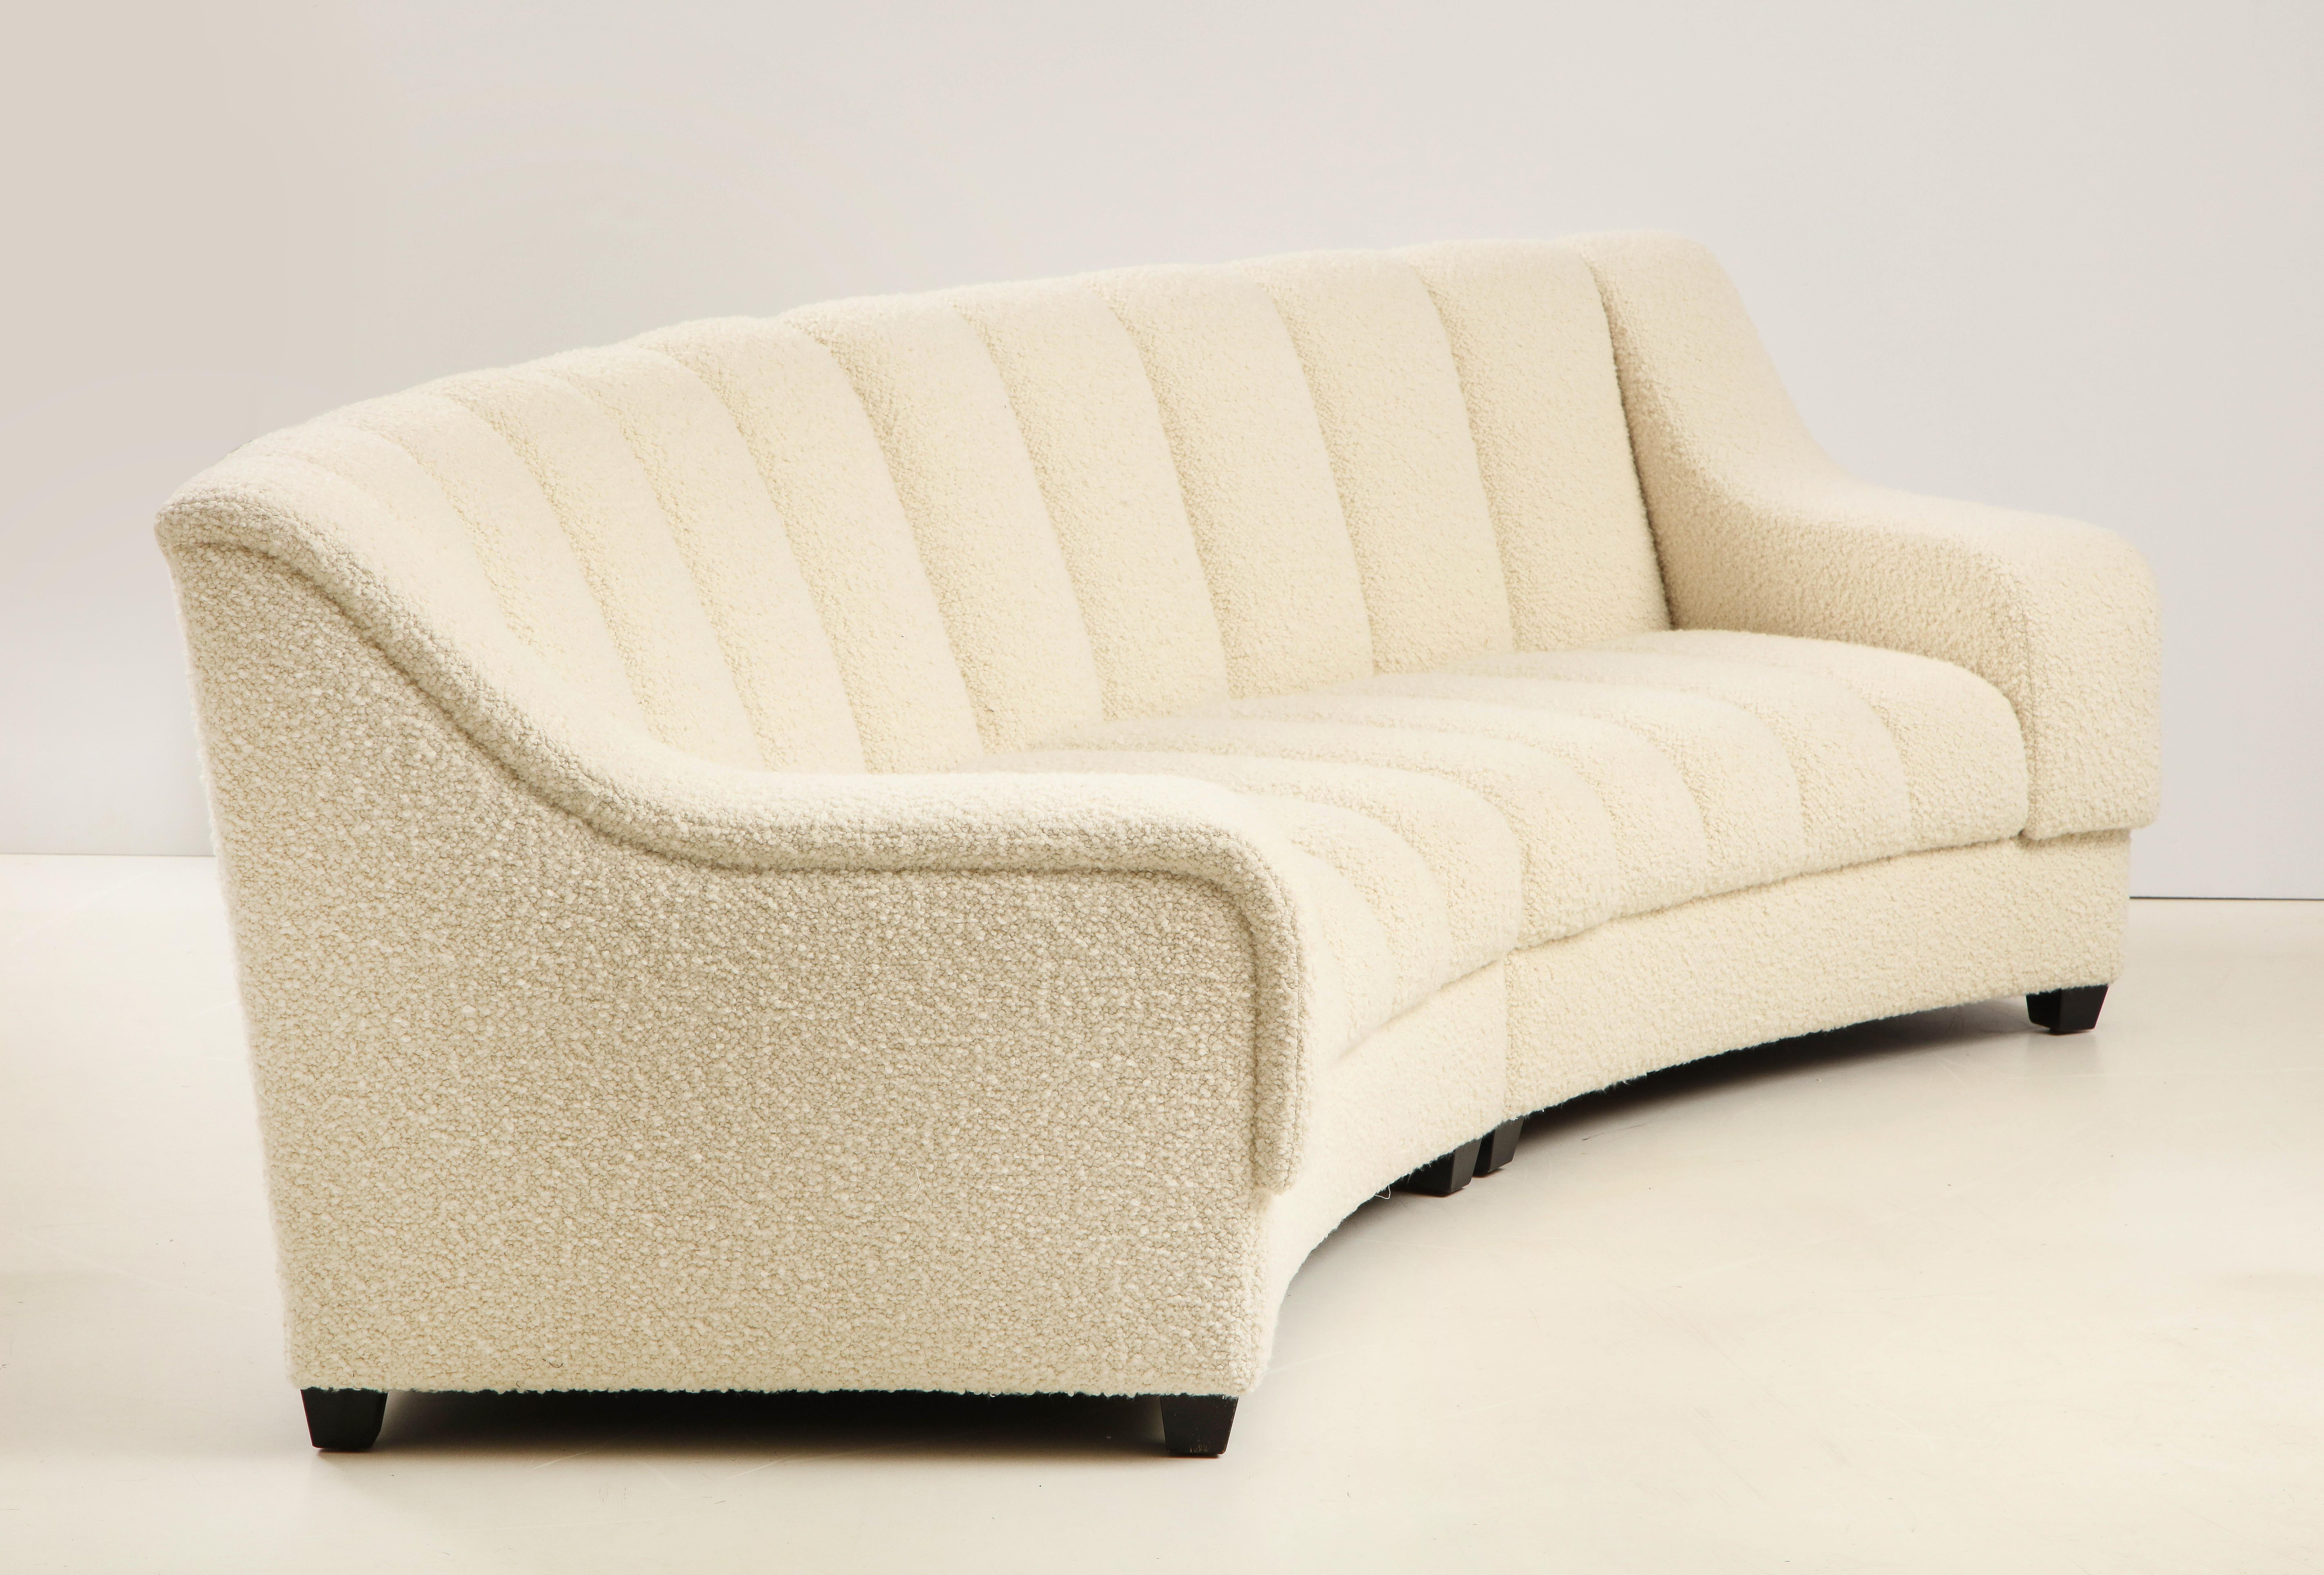 segmented sofa